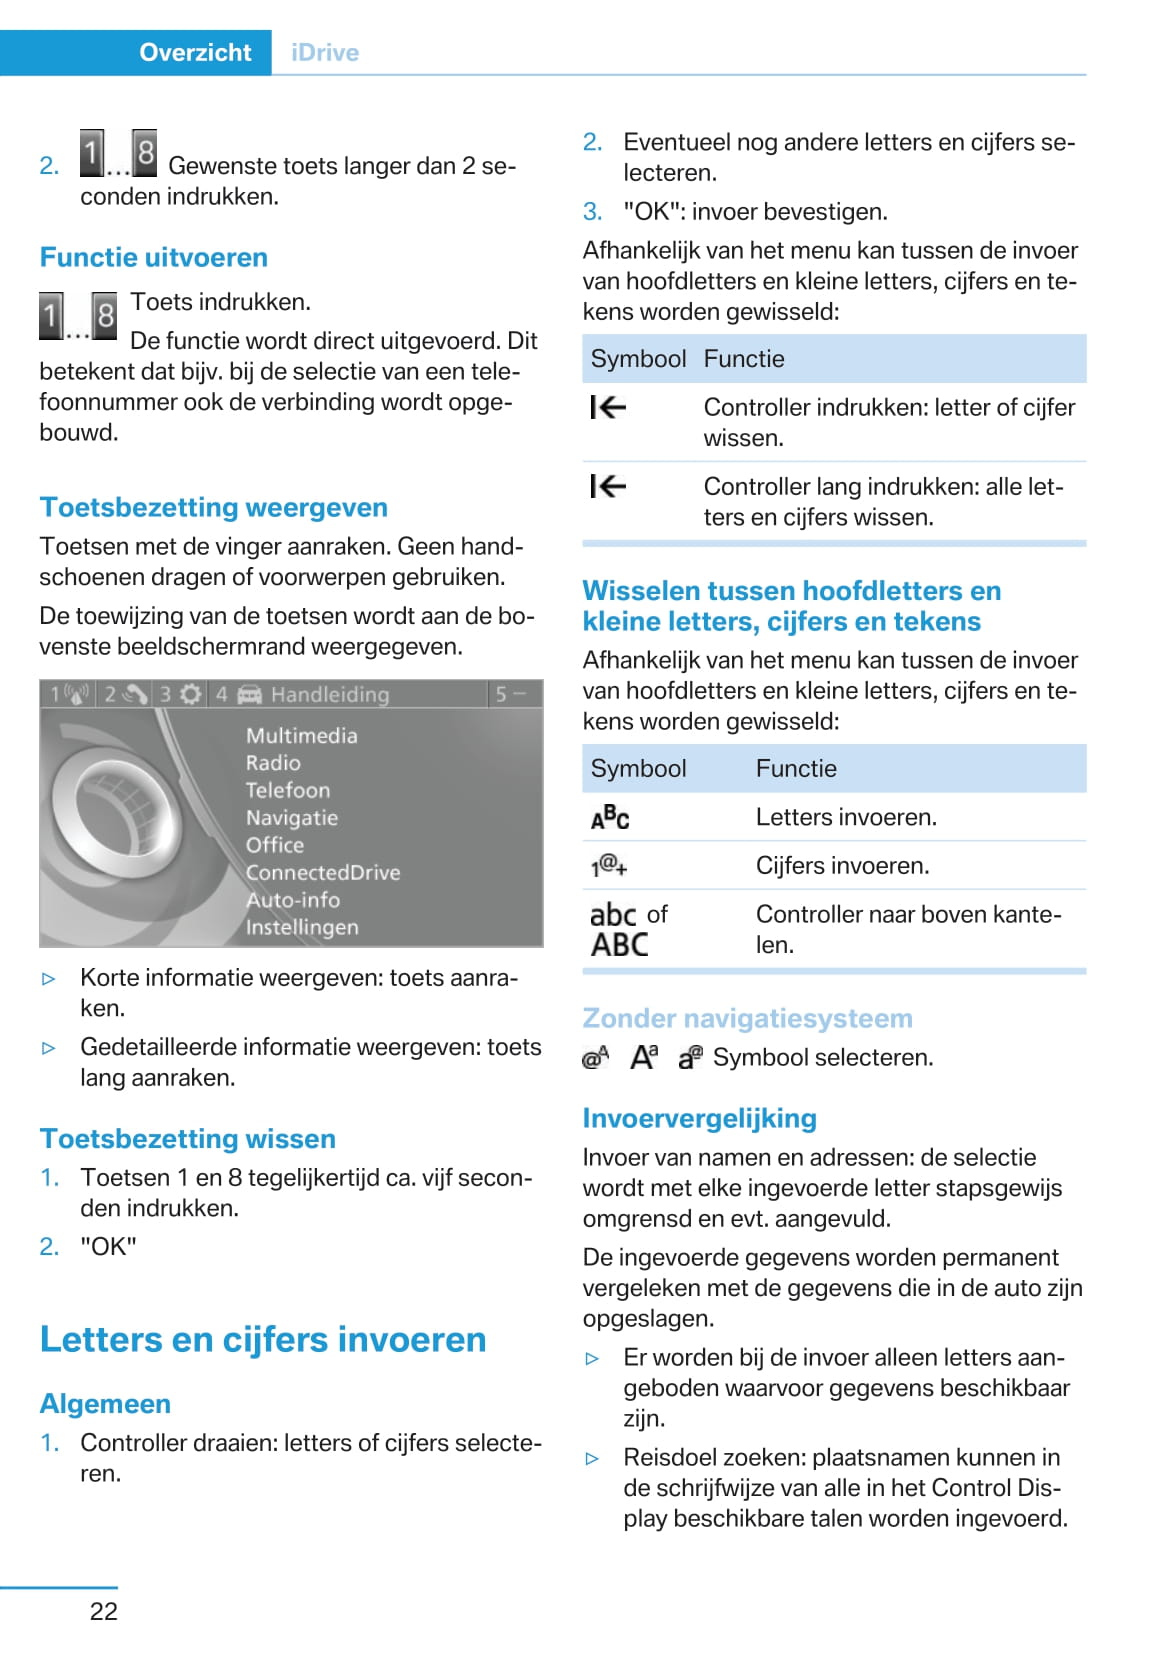 2013-2014 BMW i3 Owner's Manual | Dutch